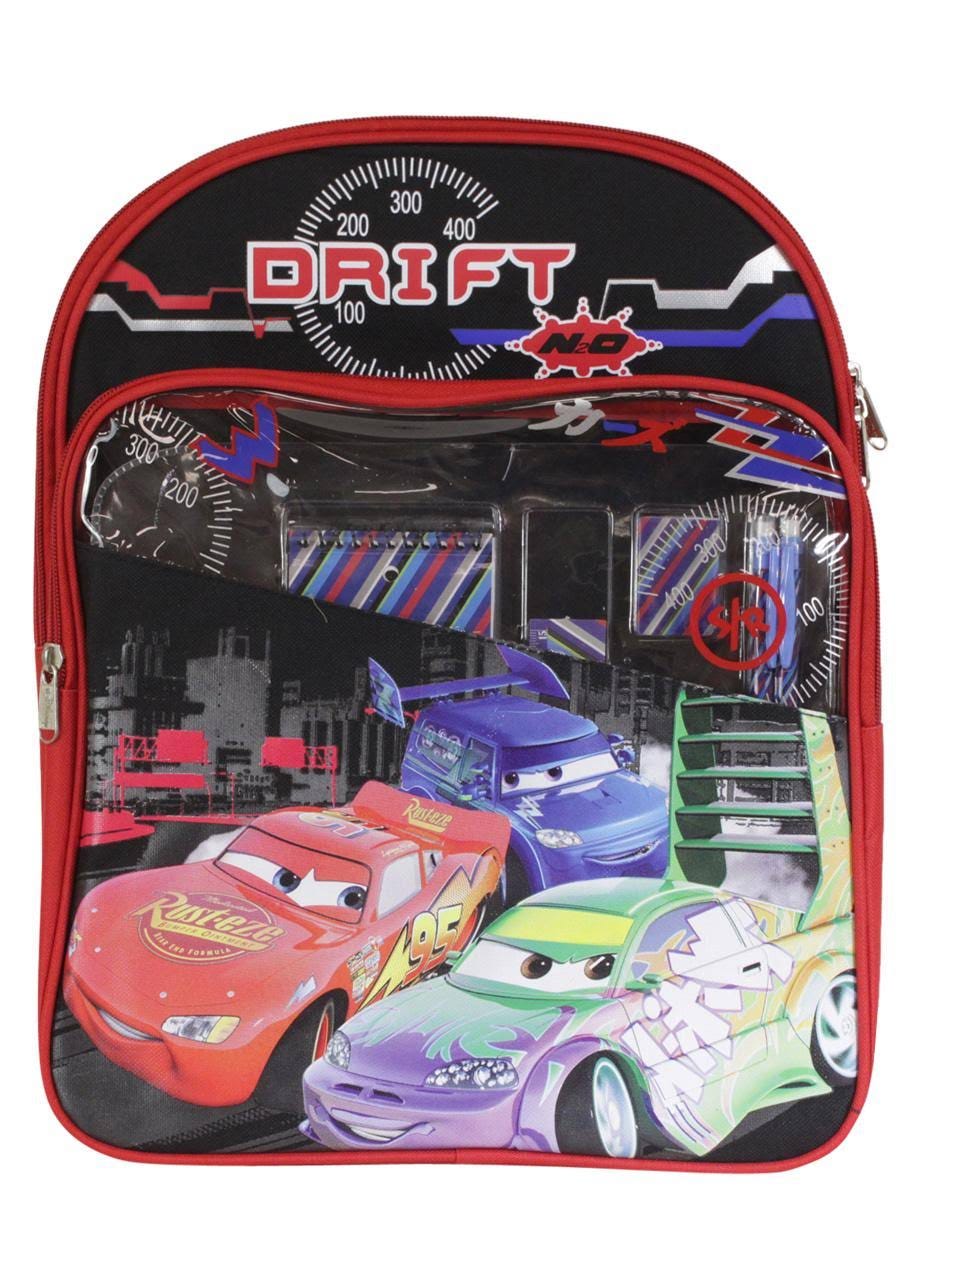 Disney Pixar Cars Themed Kids Backpack with Stationery Set | Image